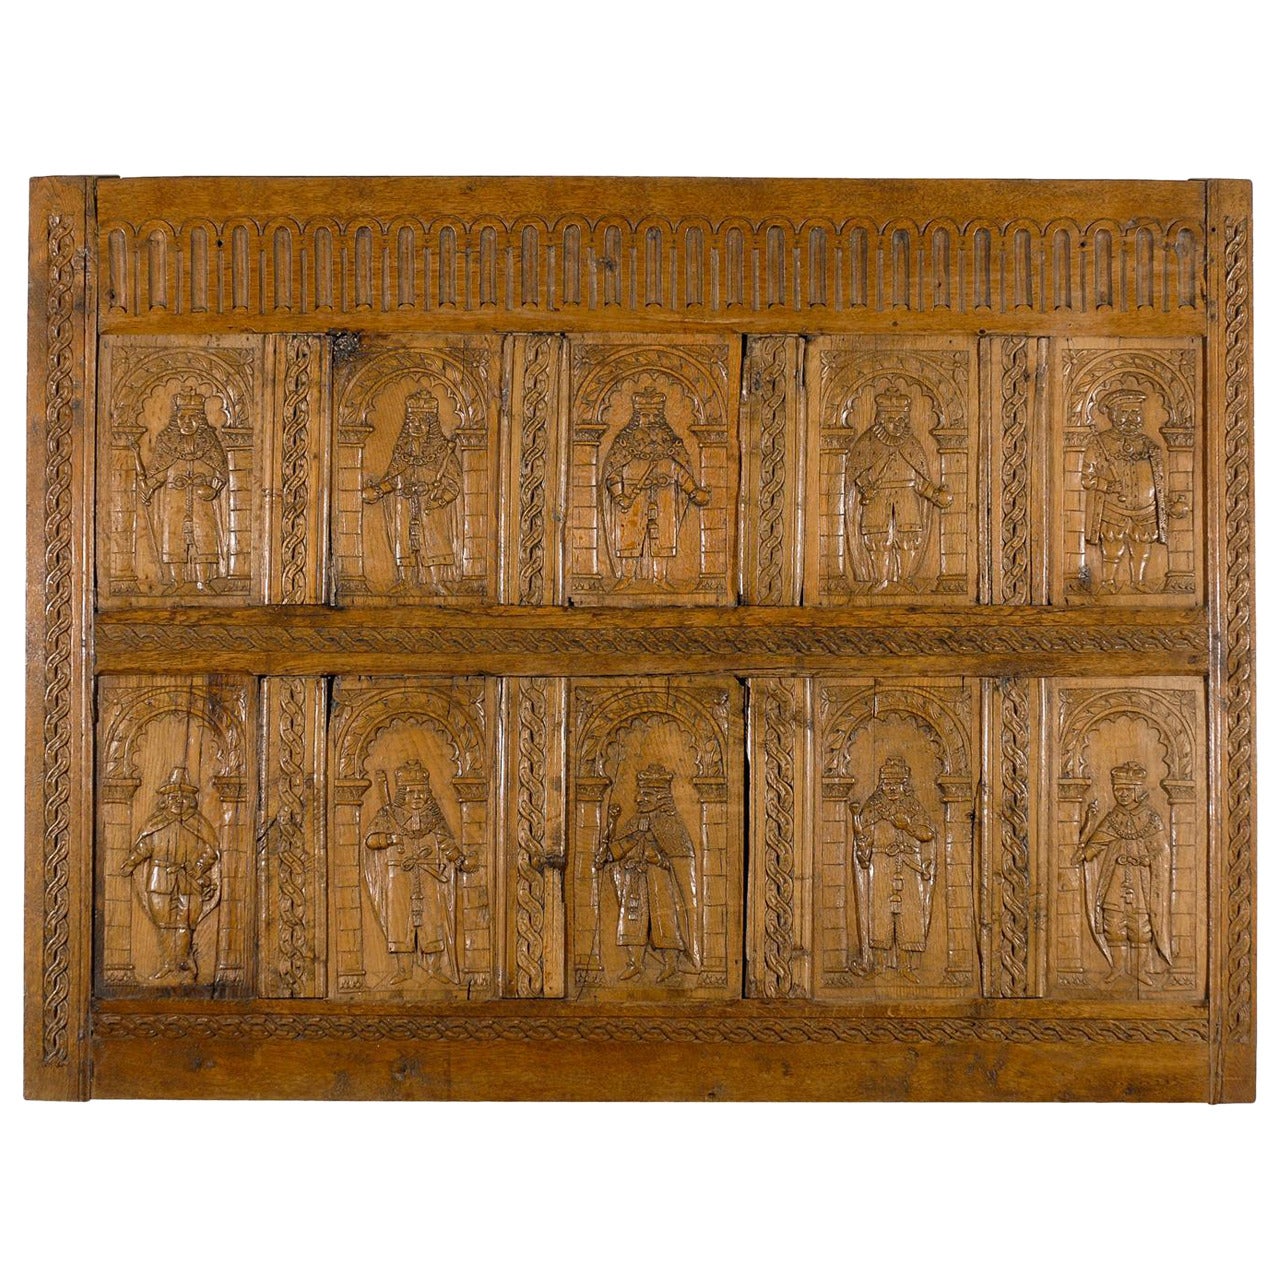 18th Century Carved English Heraldic Oak Panel